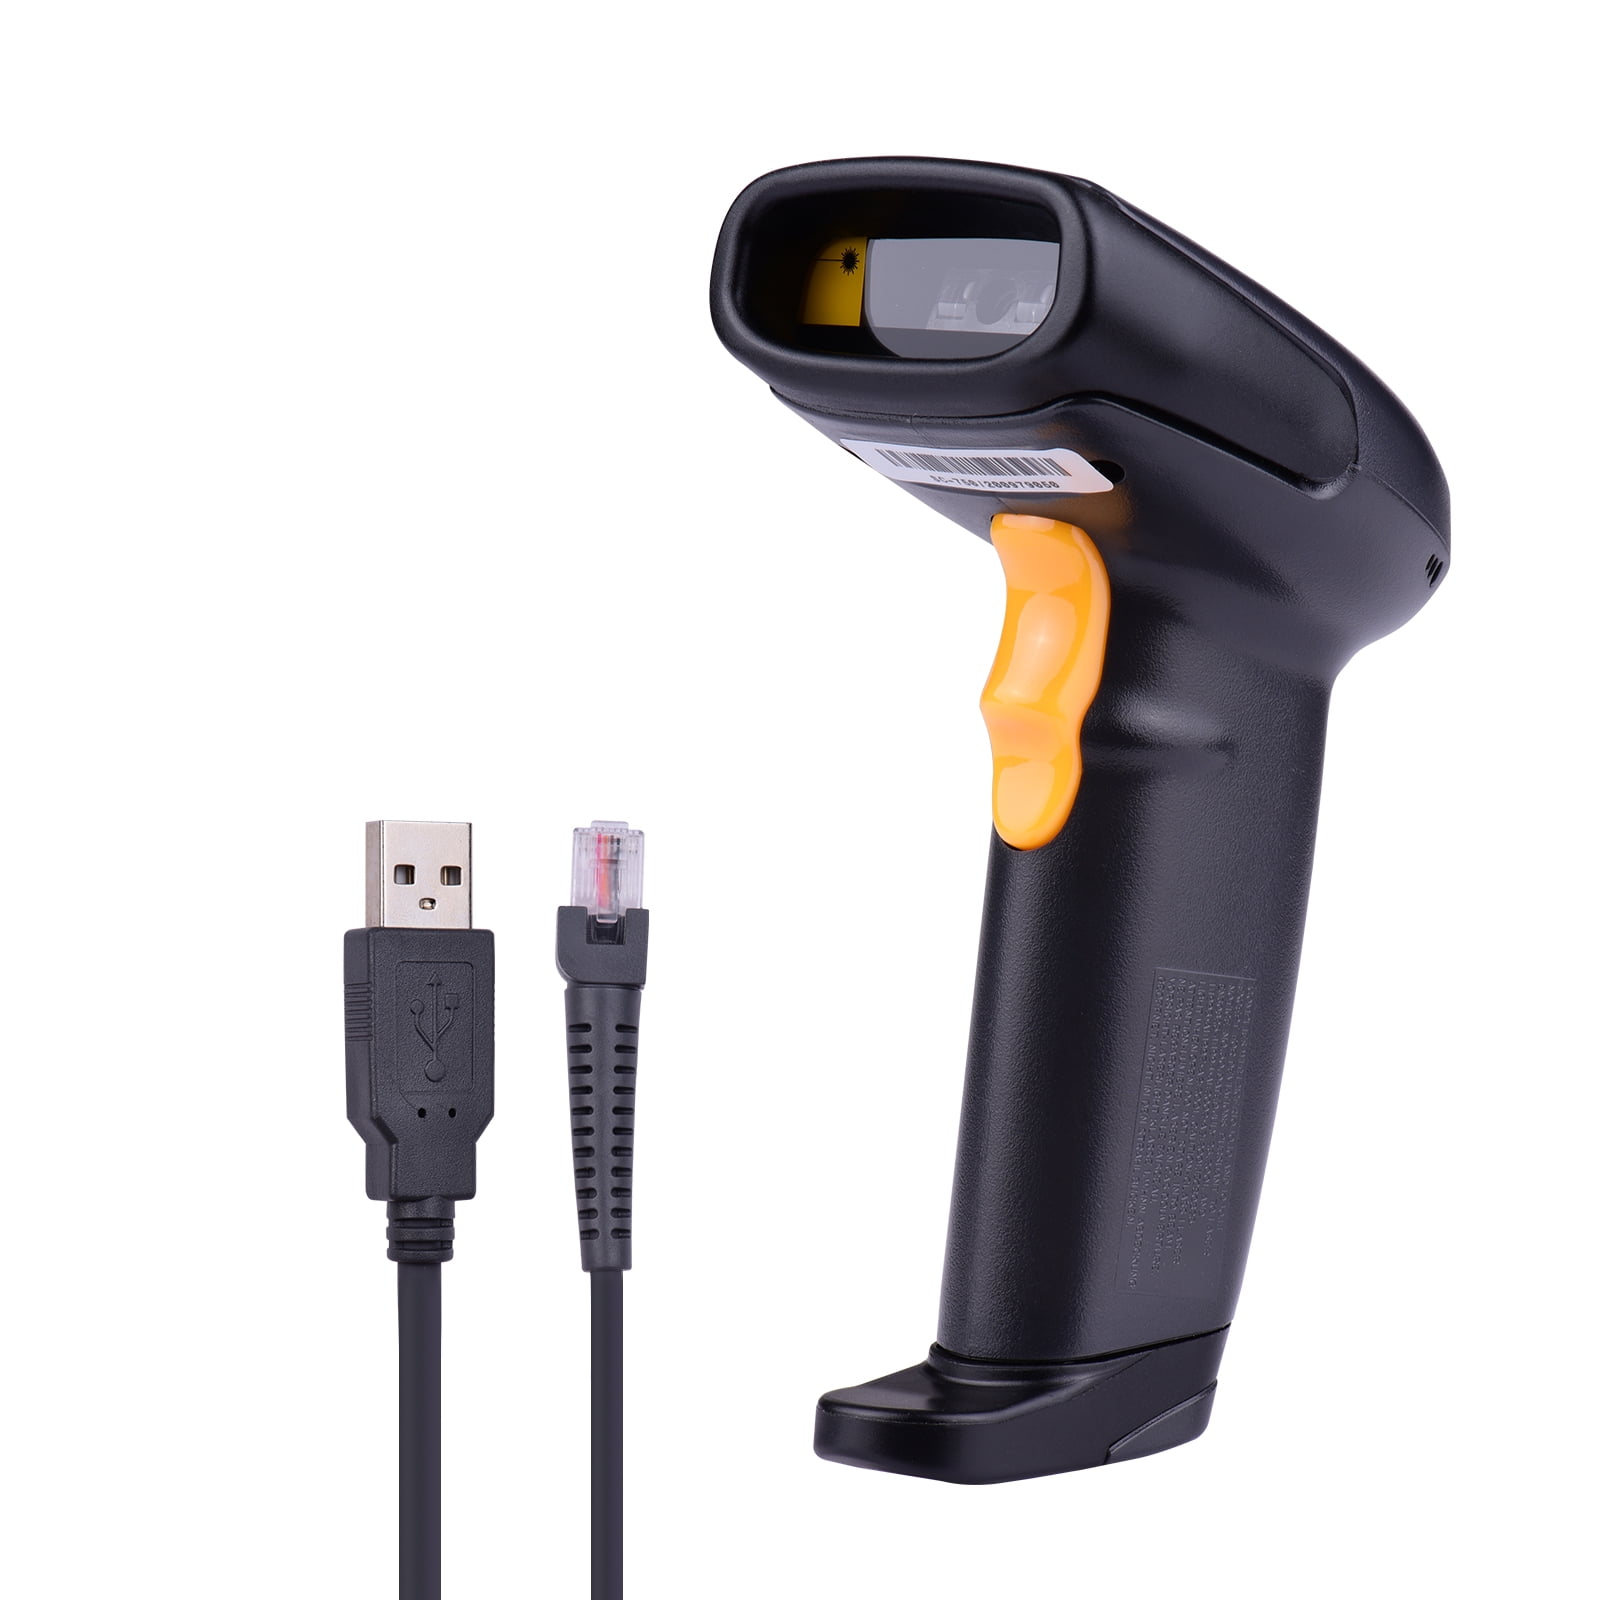 Details about   Aibecy Handheld 1D2D/QR Barcode Scanner USB Wired Bar Code Reader Manual Trigger 